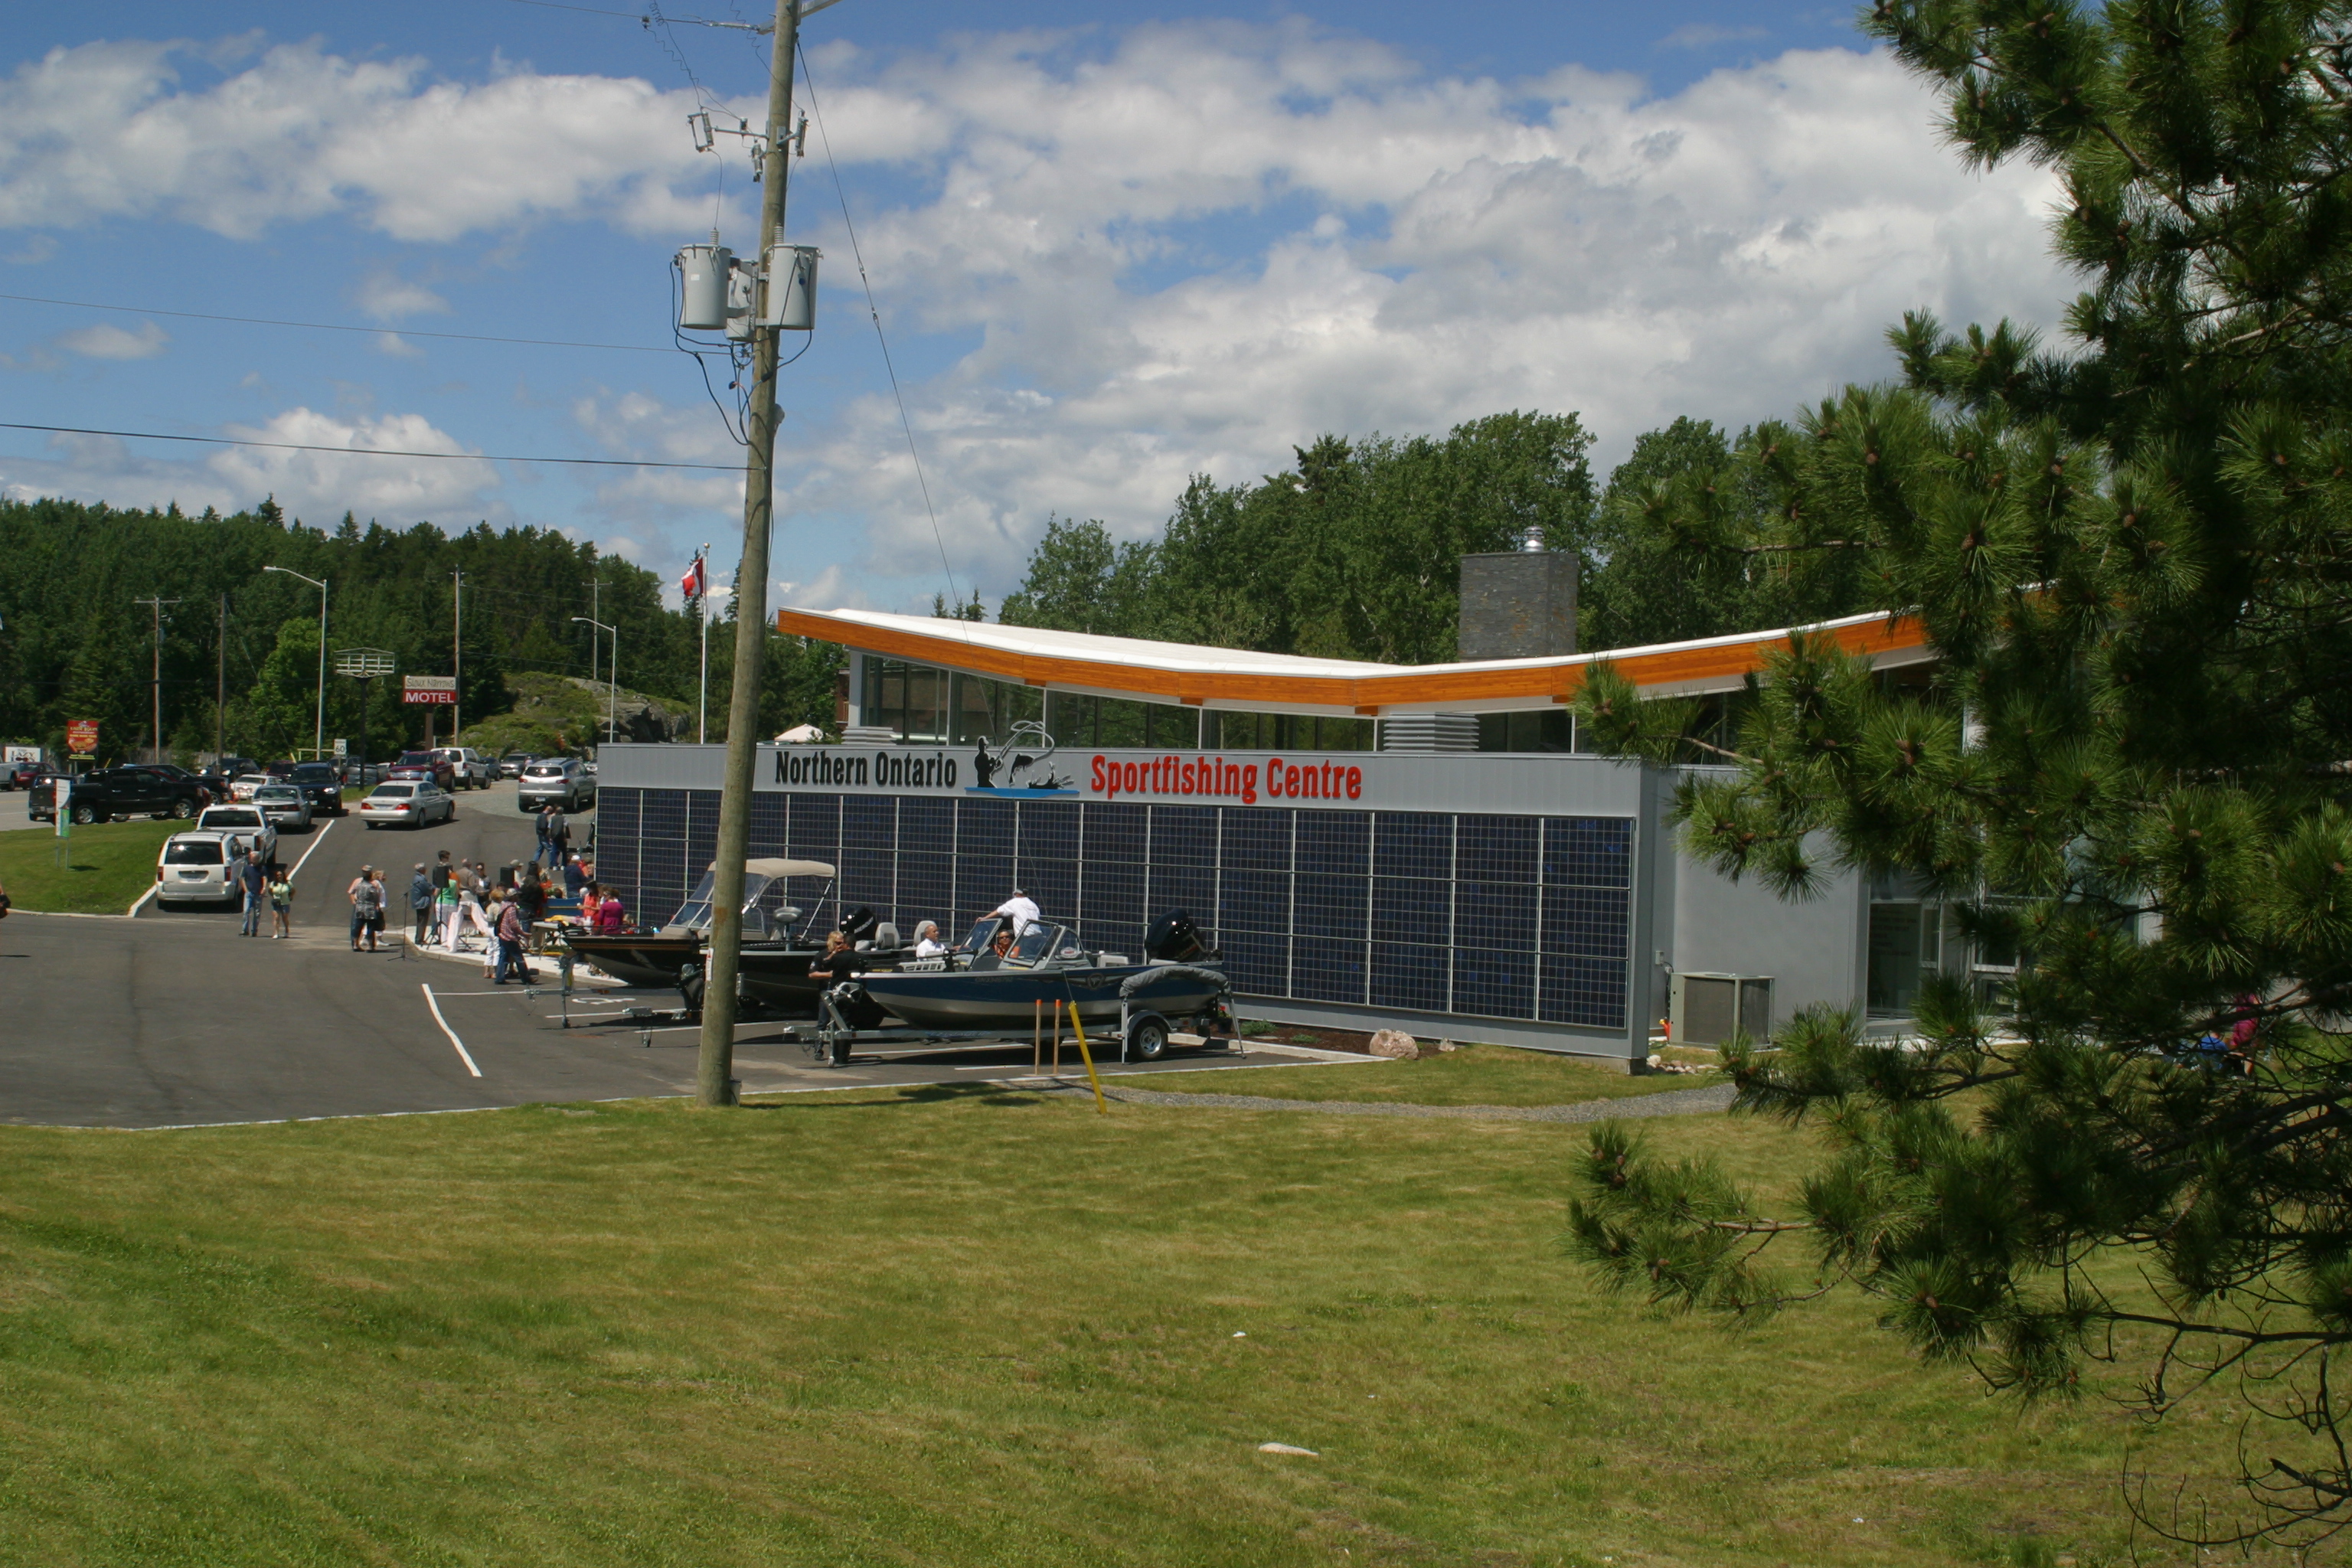 The sportfishing centre in Sioux Narrows Ontario